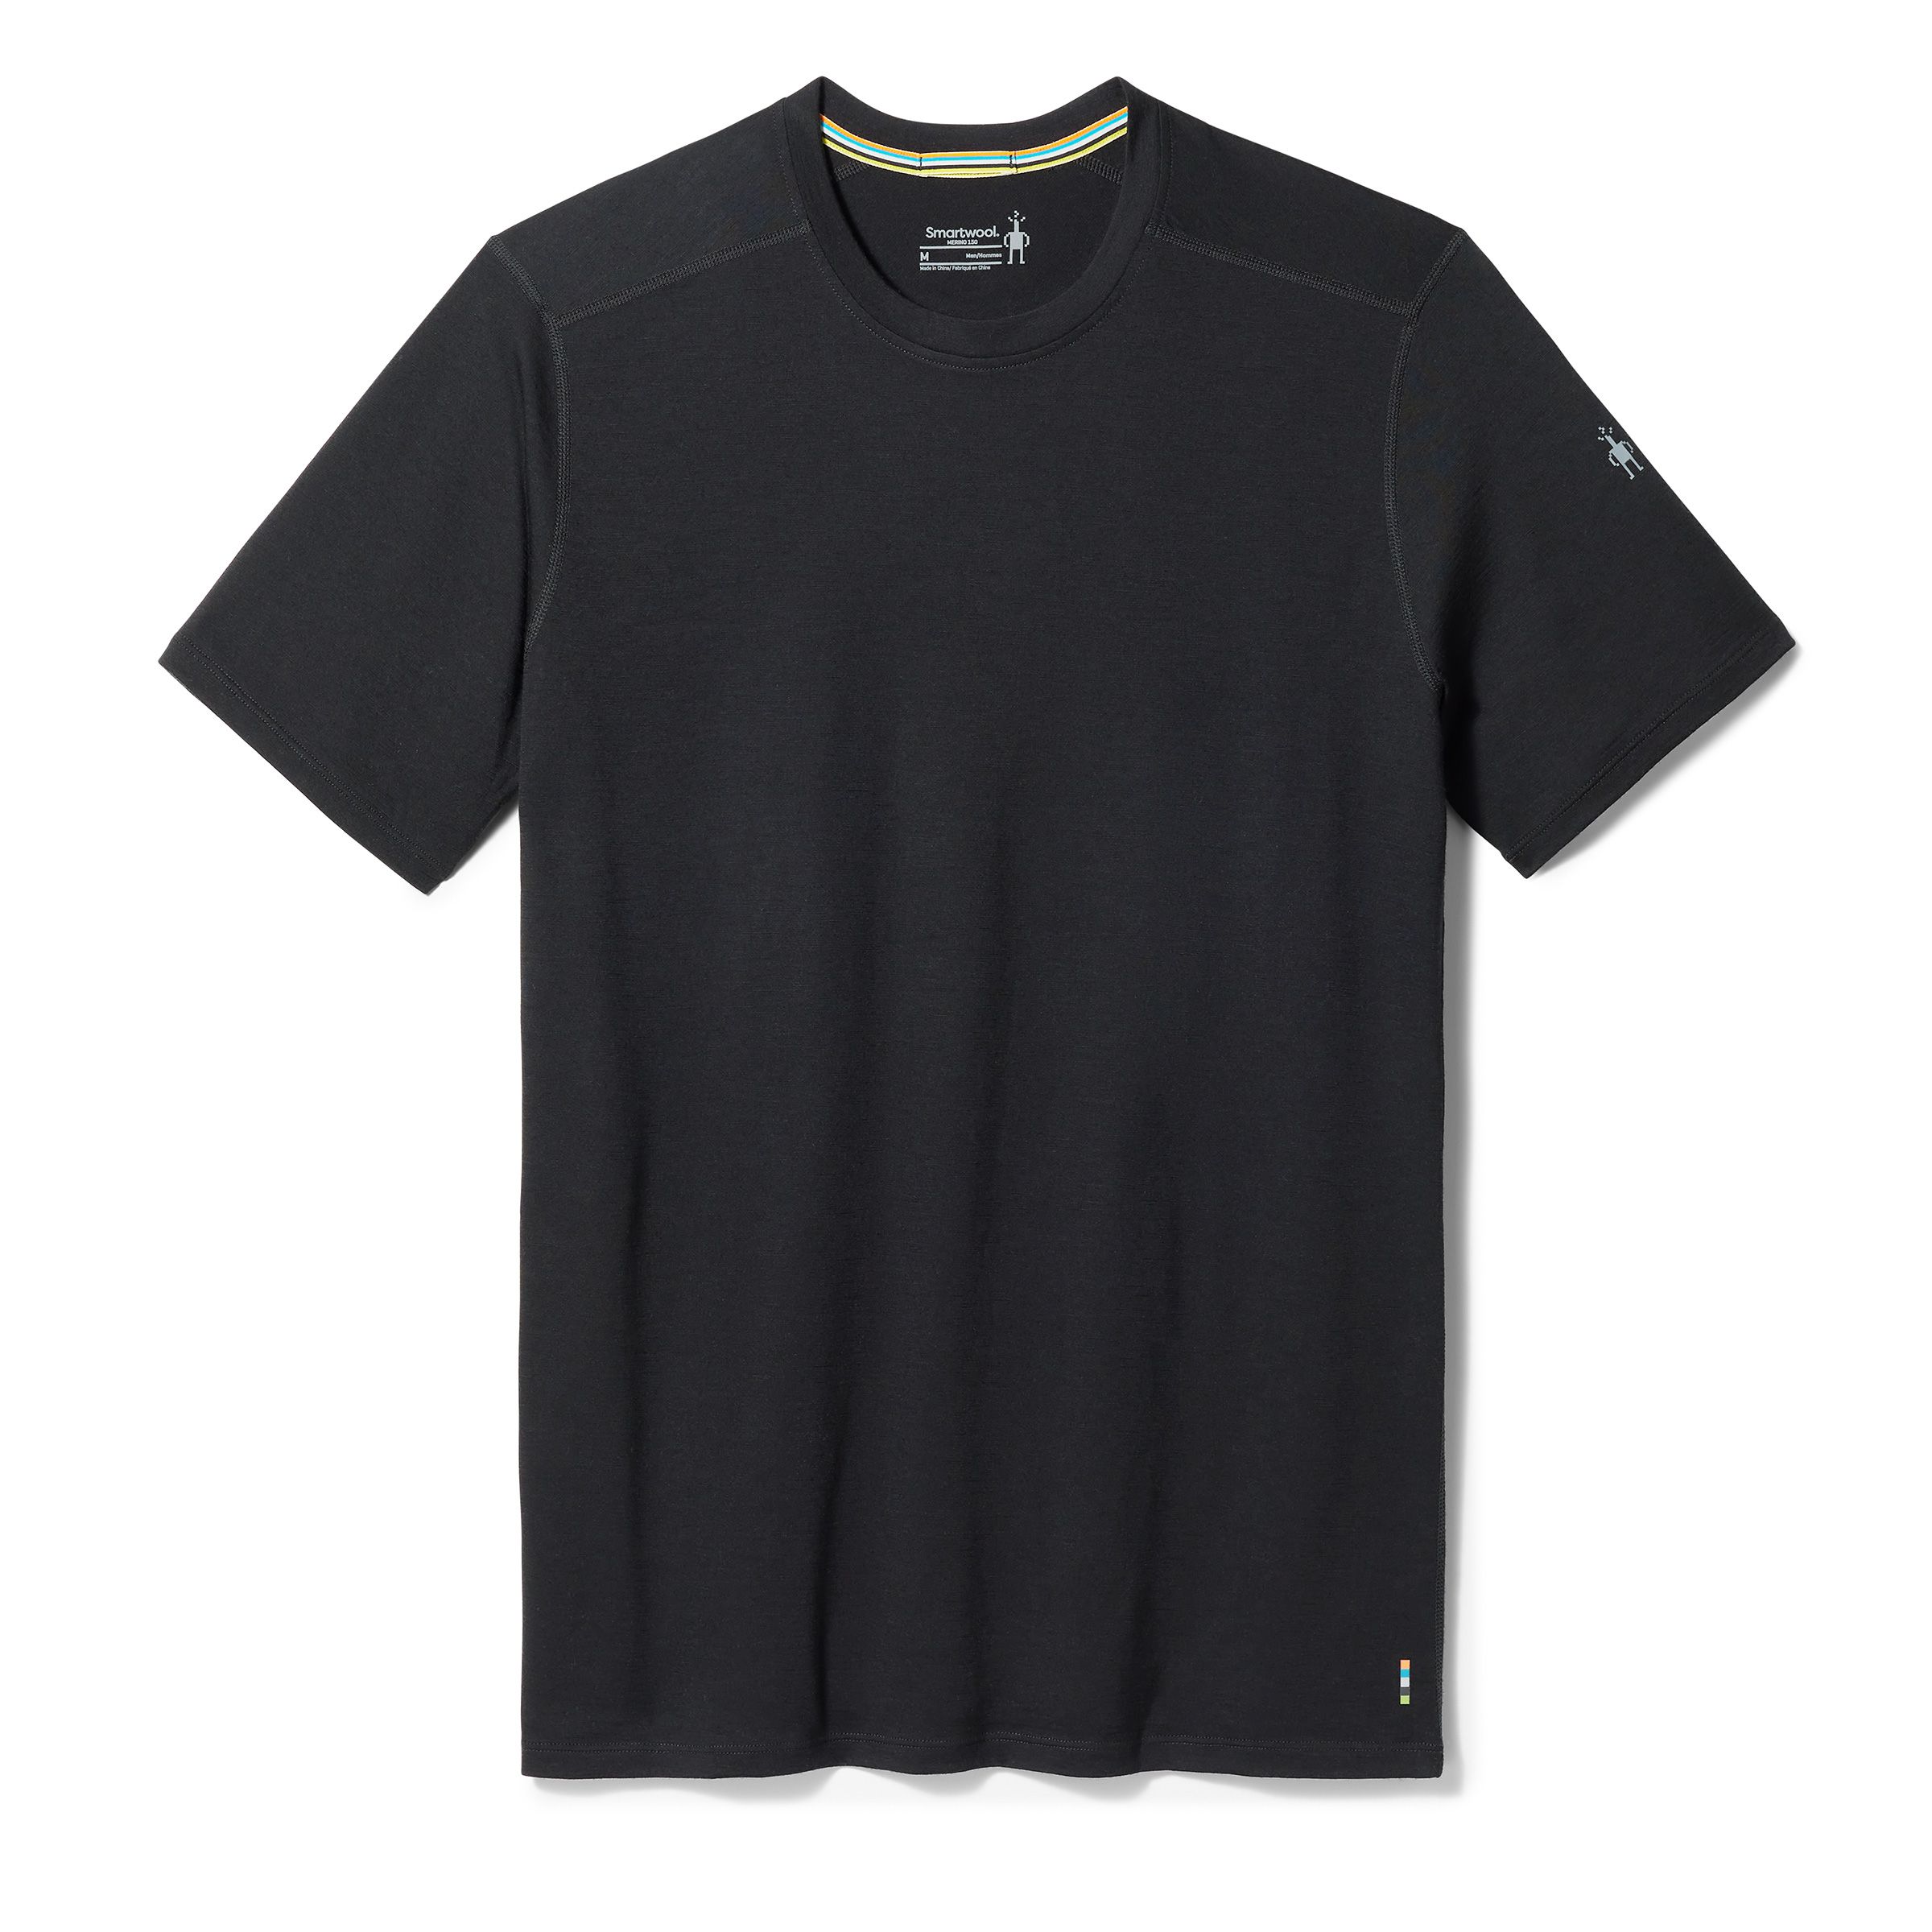 Smartwool Merino Sport 150 Overland Adventure Graphic Slim Short Sleeve  T-Shirt Grey